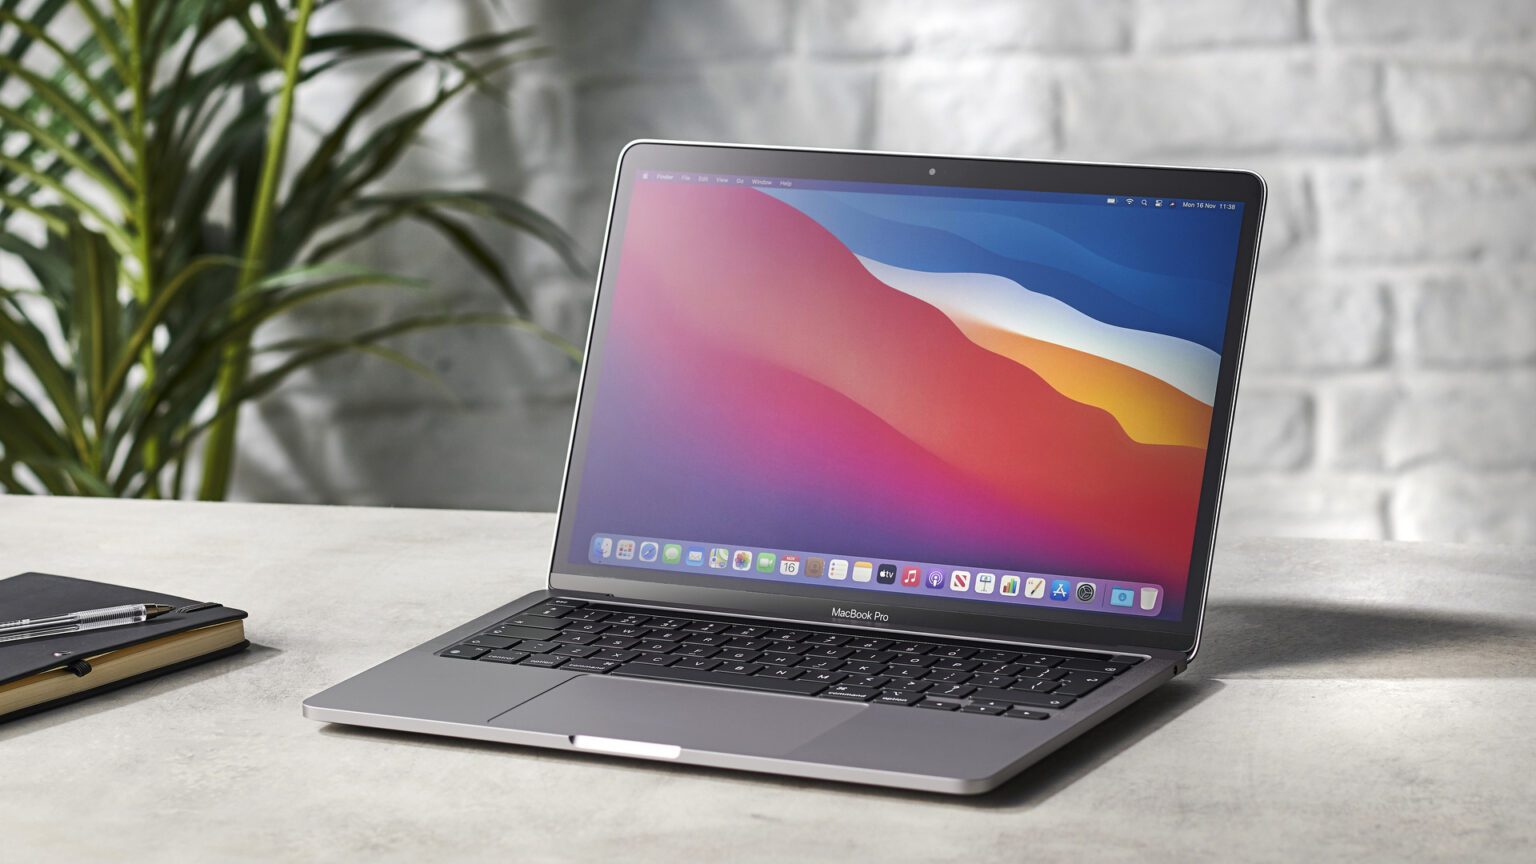 MacBook Pro cto 1tb